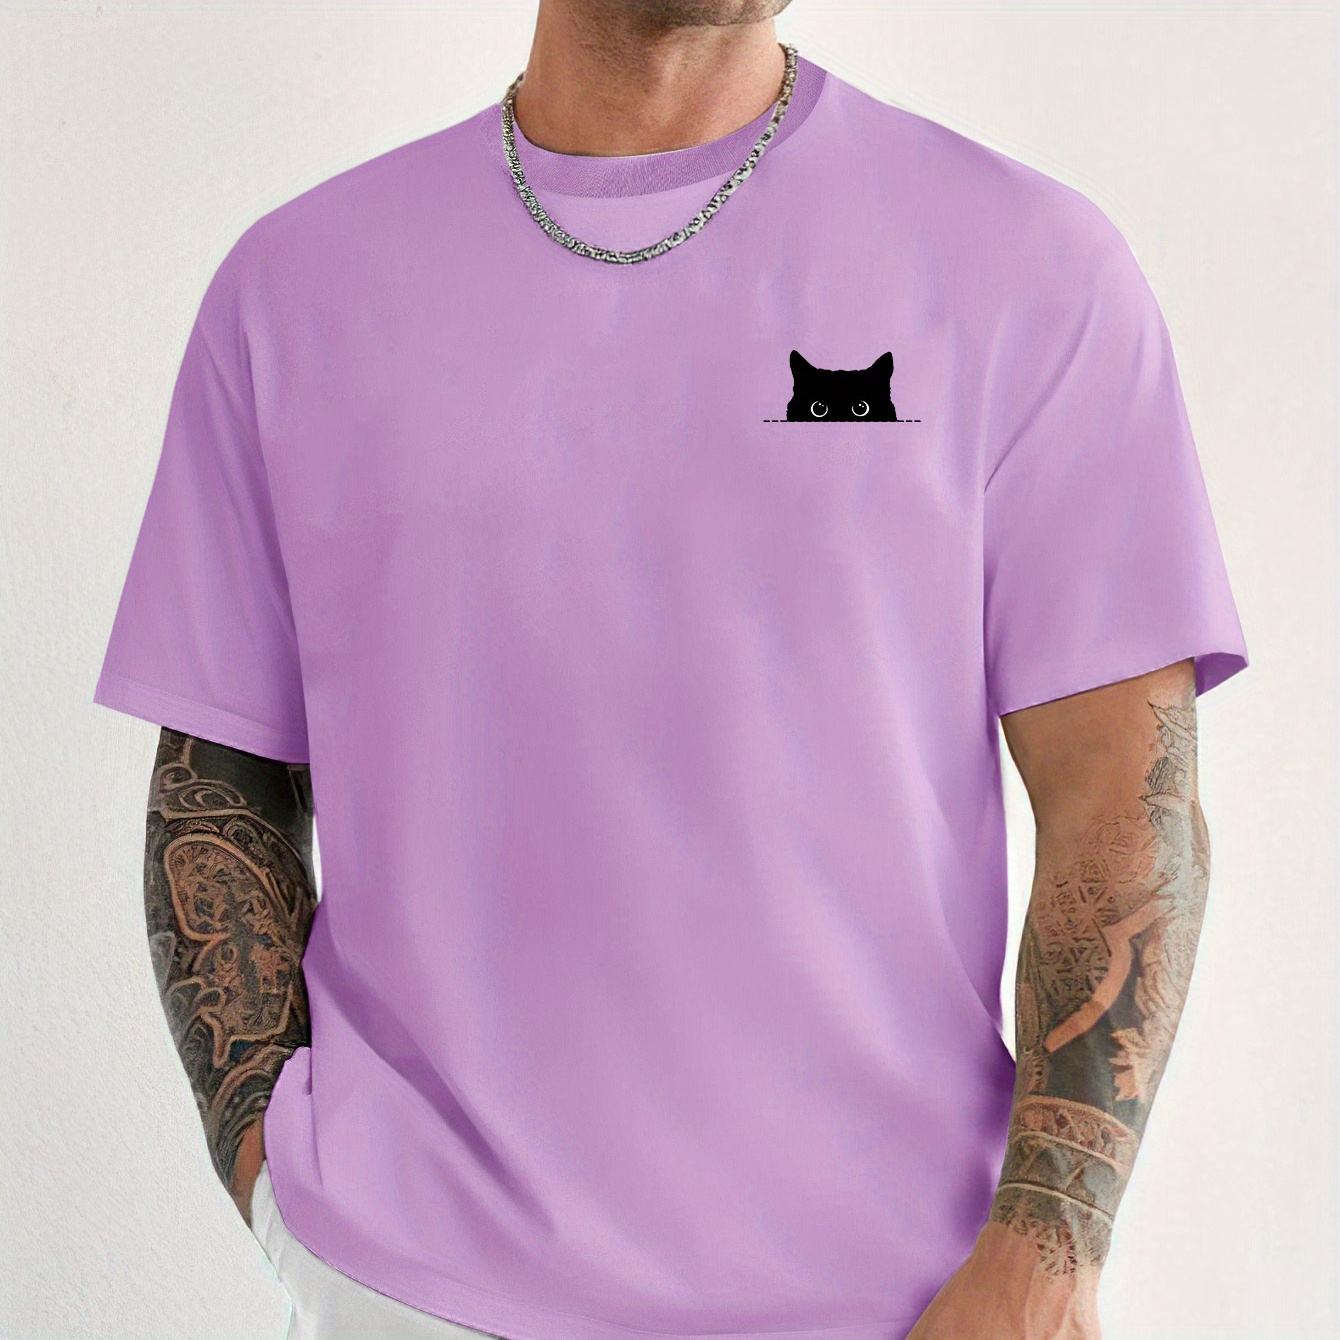 

Black Cat Print Purple Tee Shirt, Tees For Men, Casual Short Sleeve T-shirt For Summer